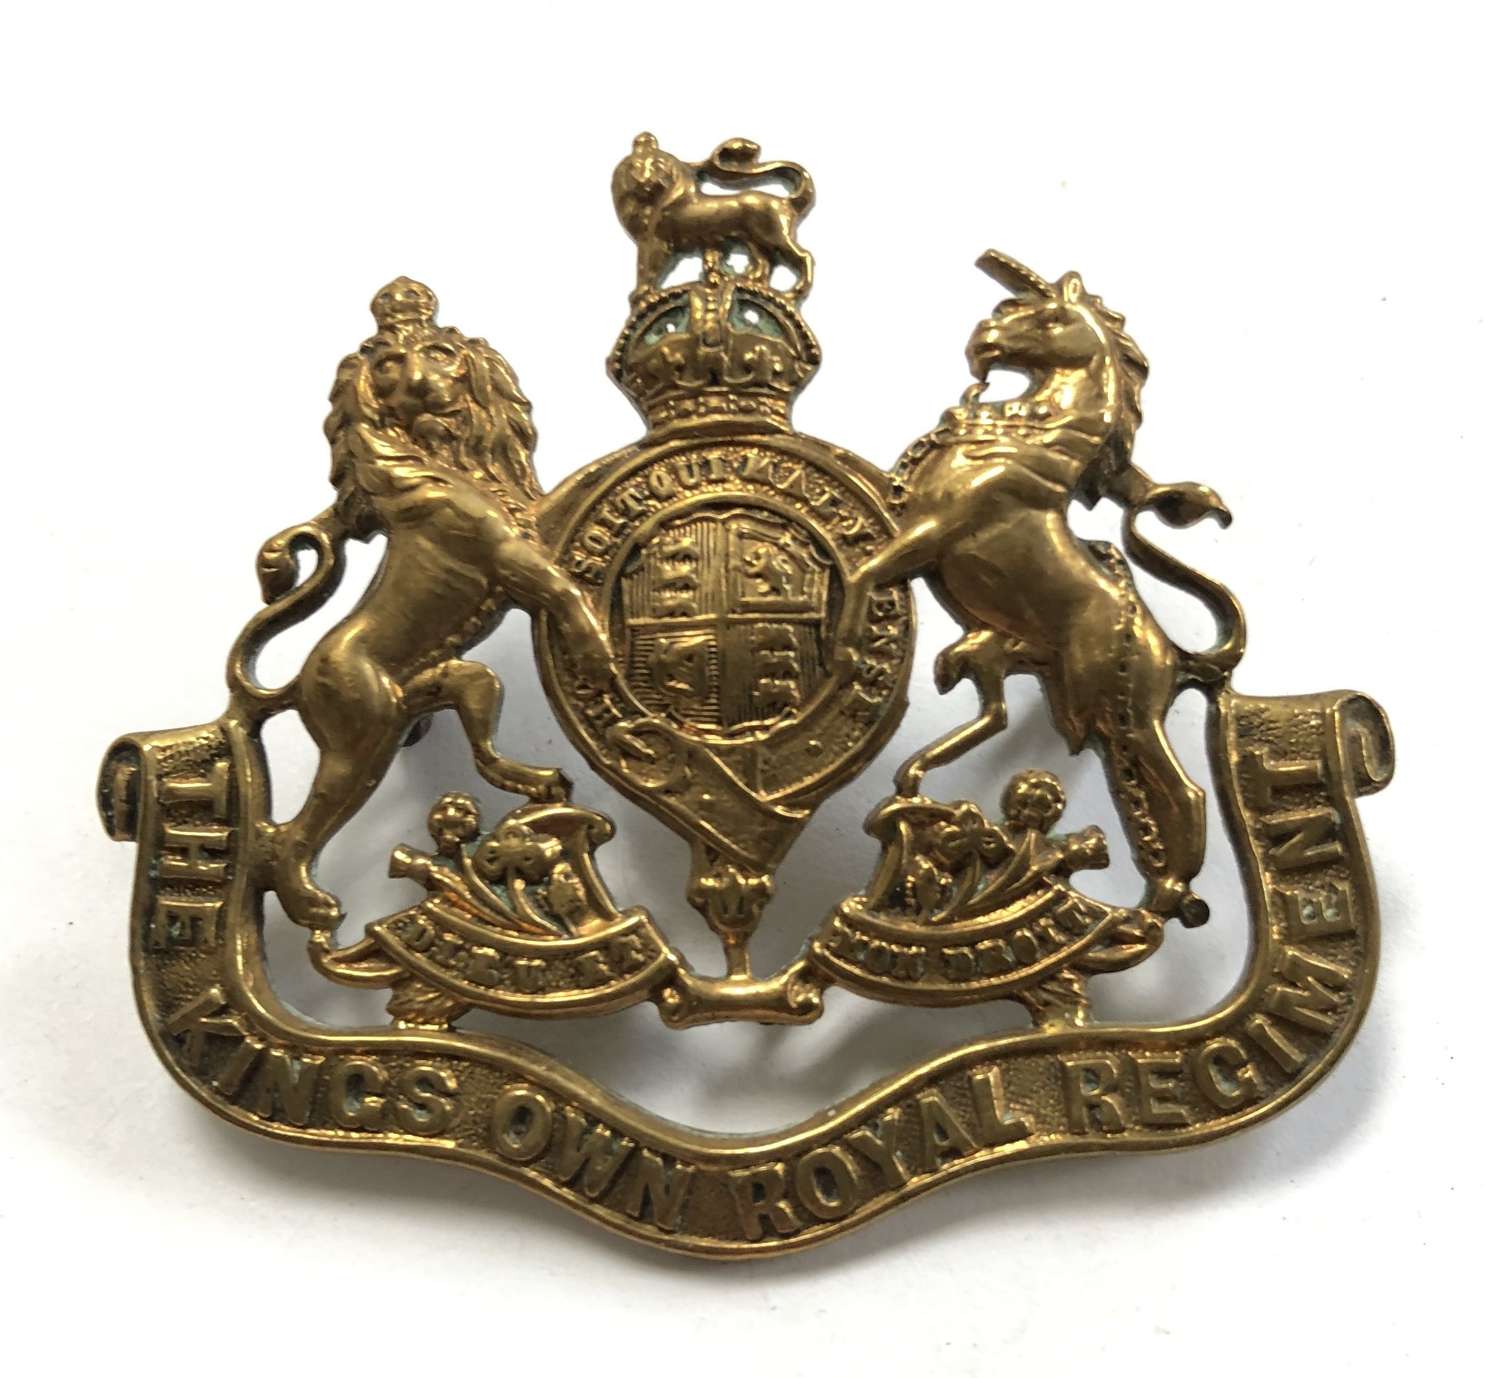 Norfolk Yeomanry NCO's arm badge circa 1905-20